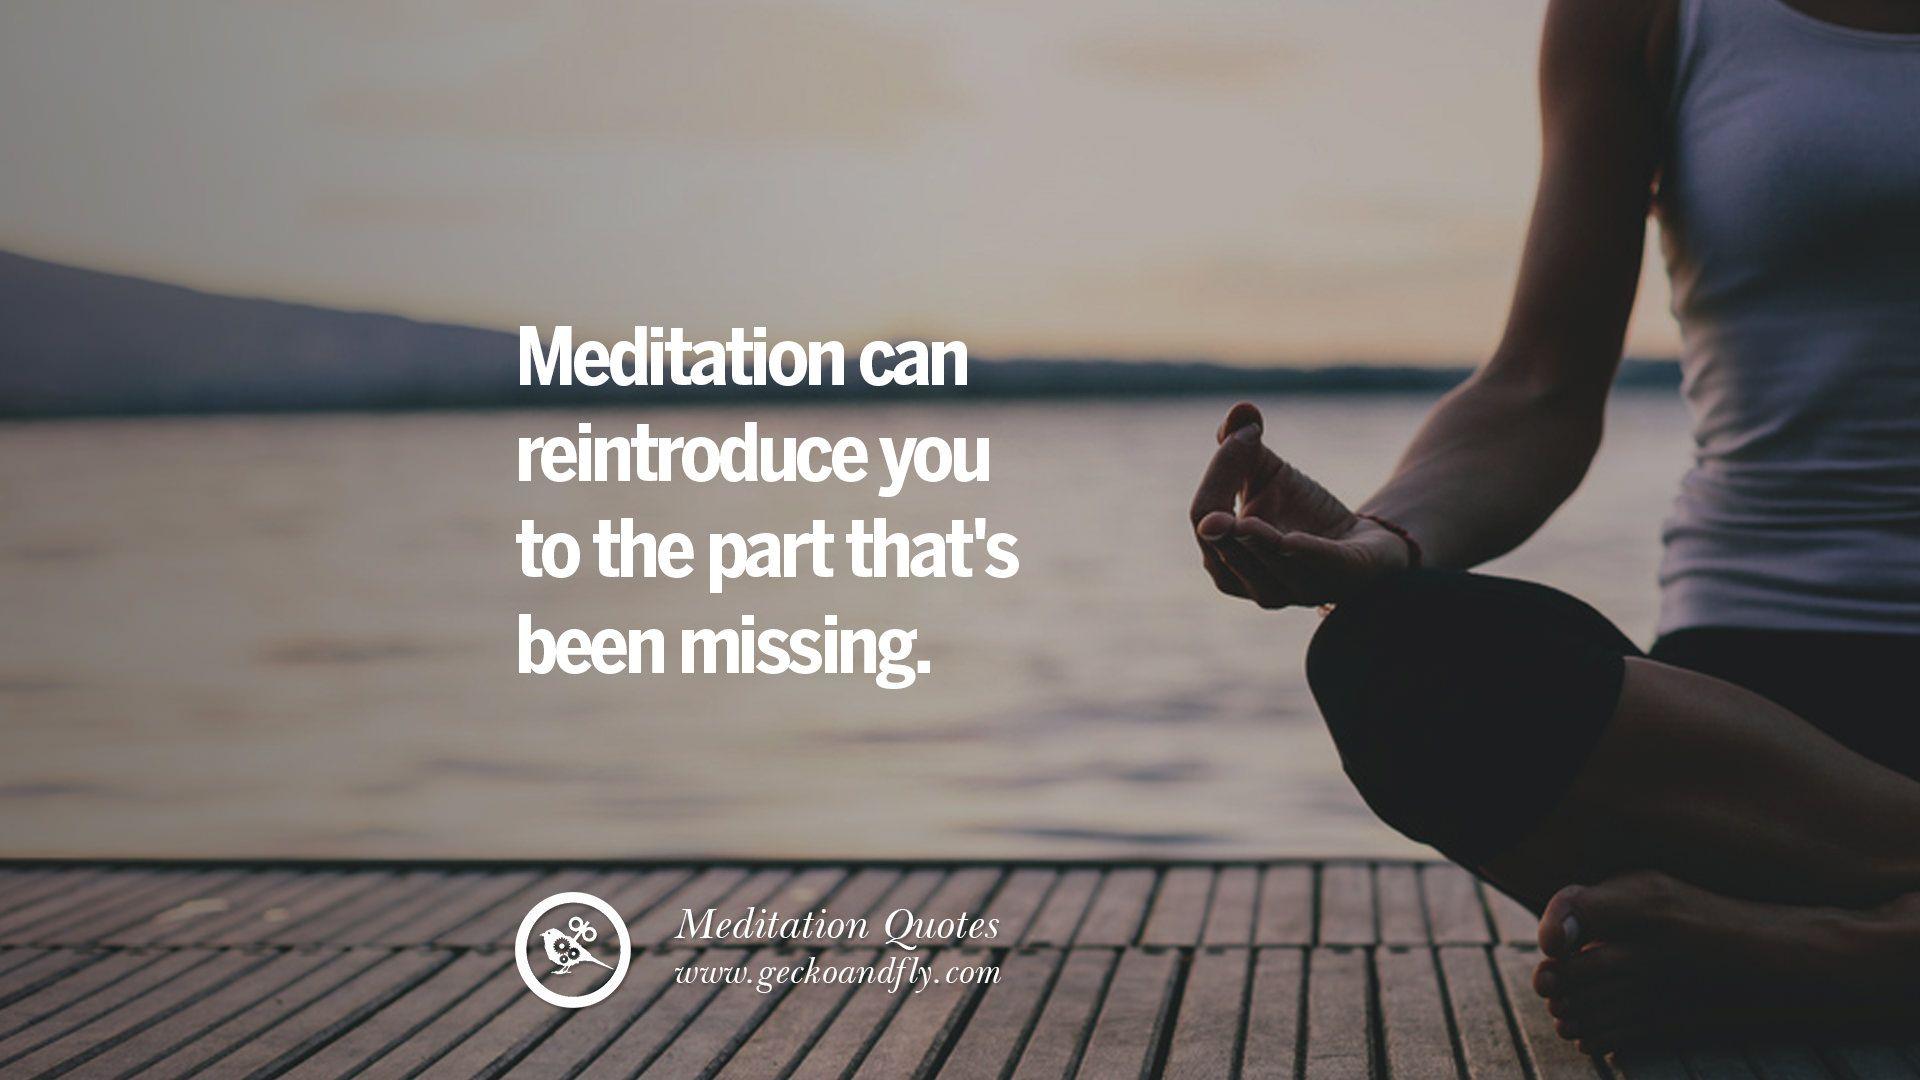 Famous Quotes on Mindfulness Meditation For Yoga, Sleeping